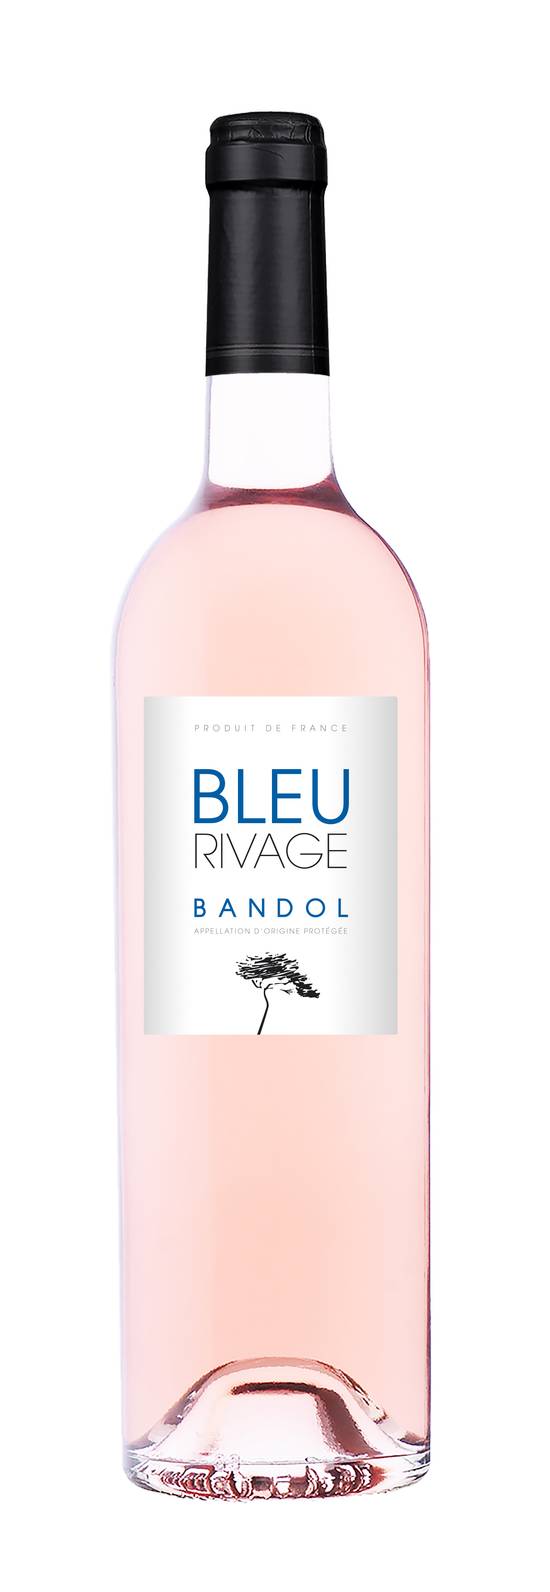 Les Vins Bréban - Vin rosé AOP bandol bleu rivage domestique (750 ml)